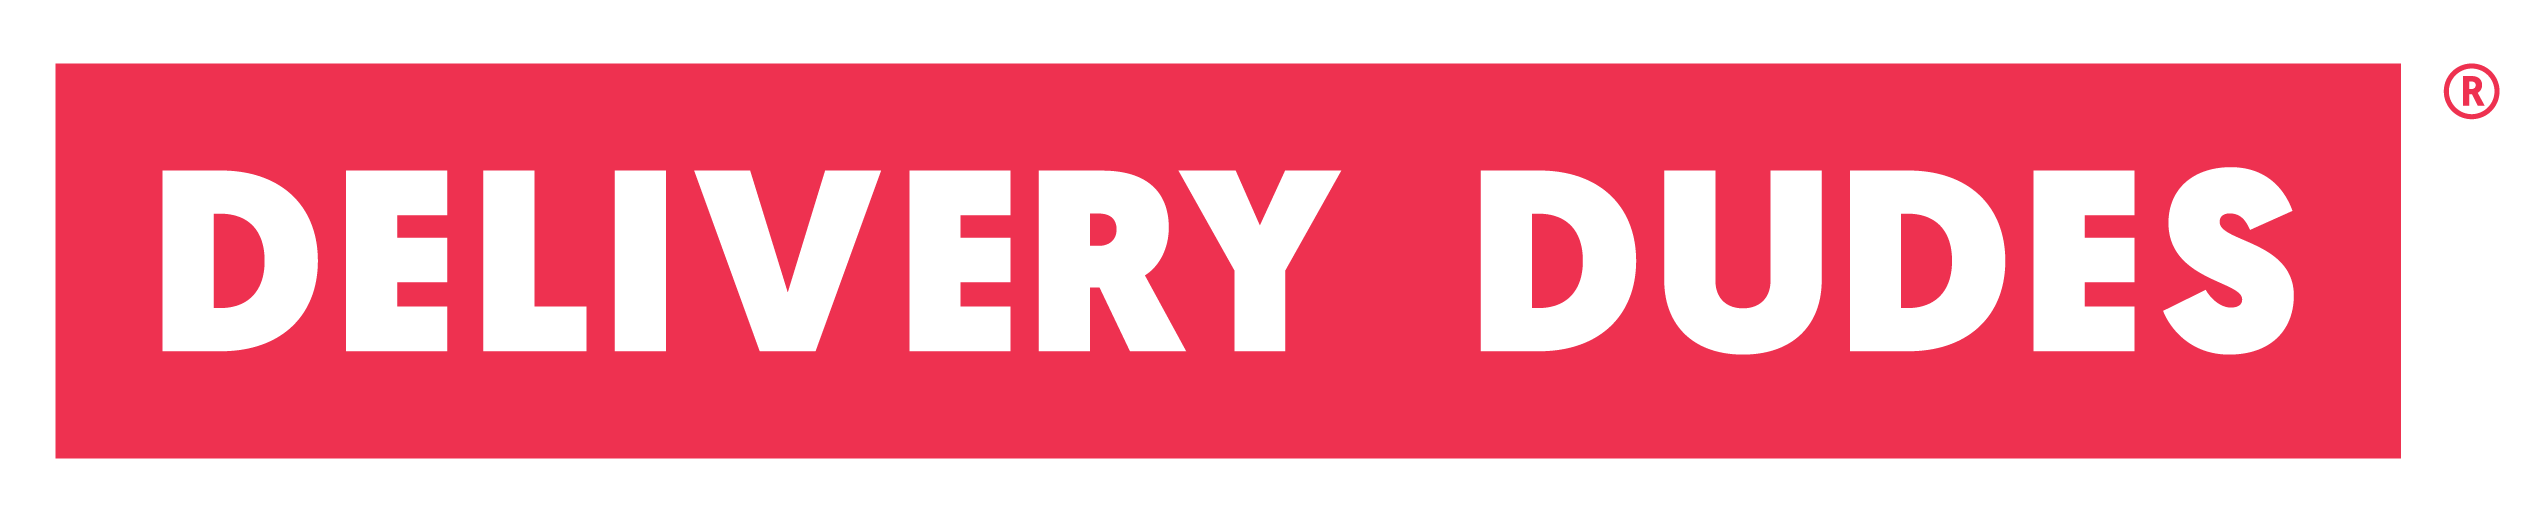 Delivery Dudes Logo